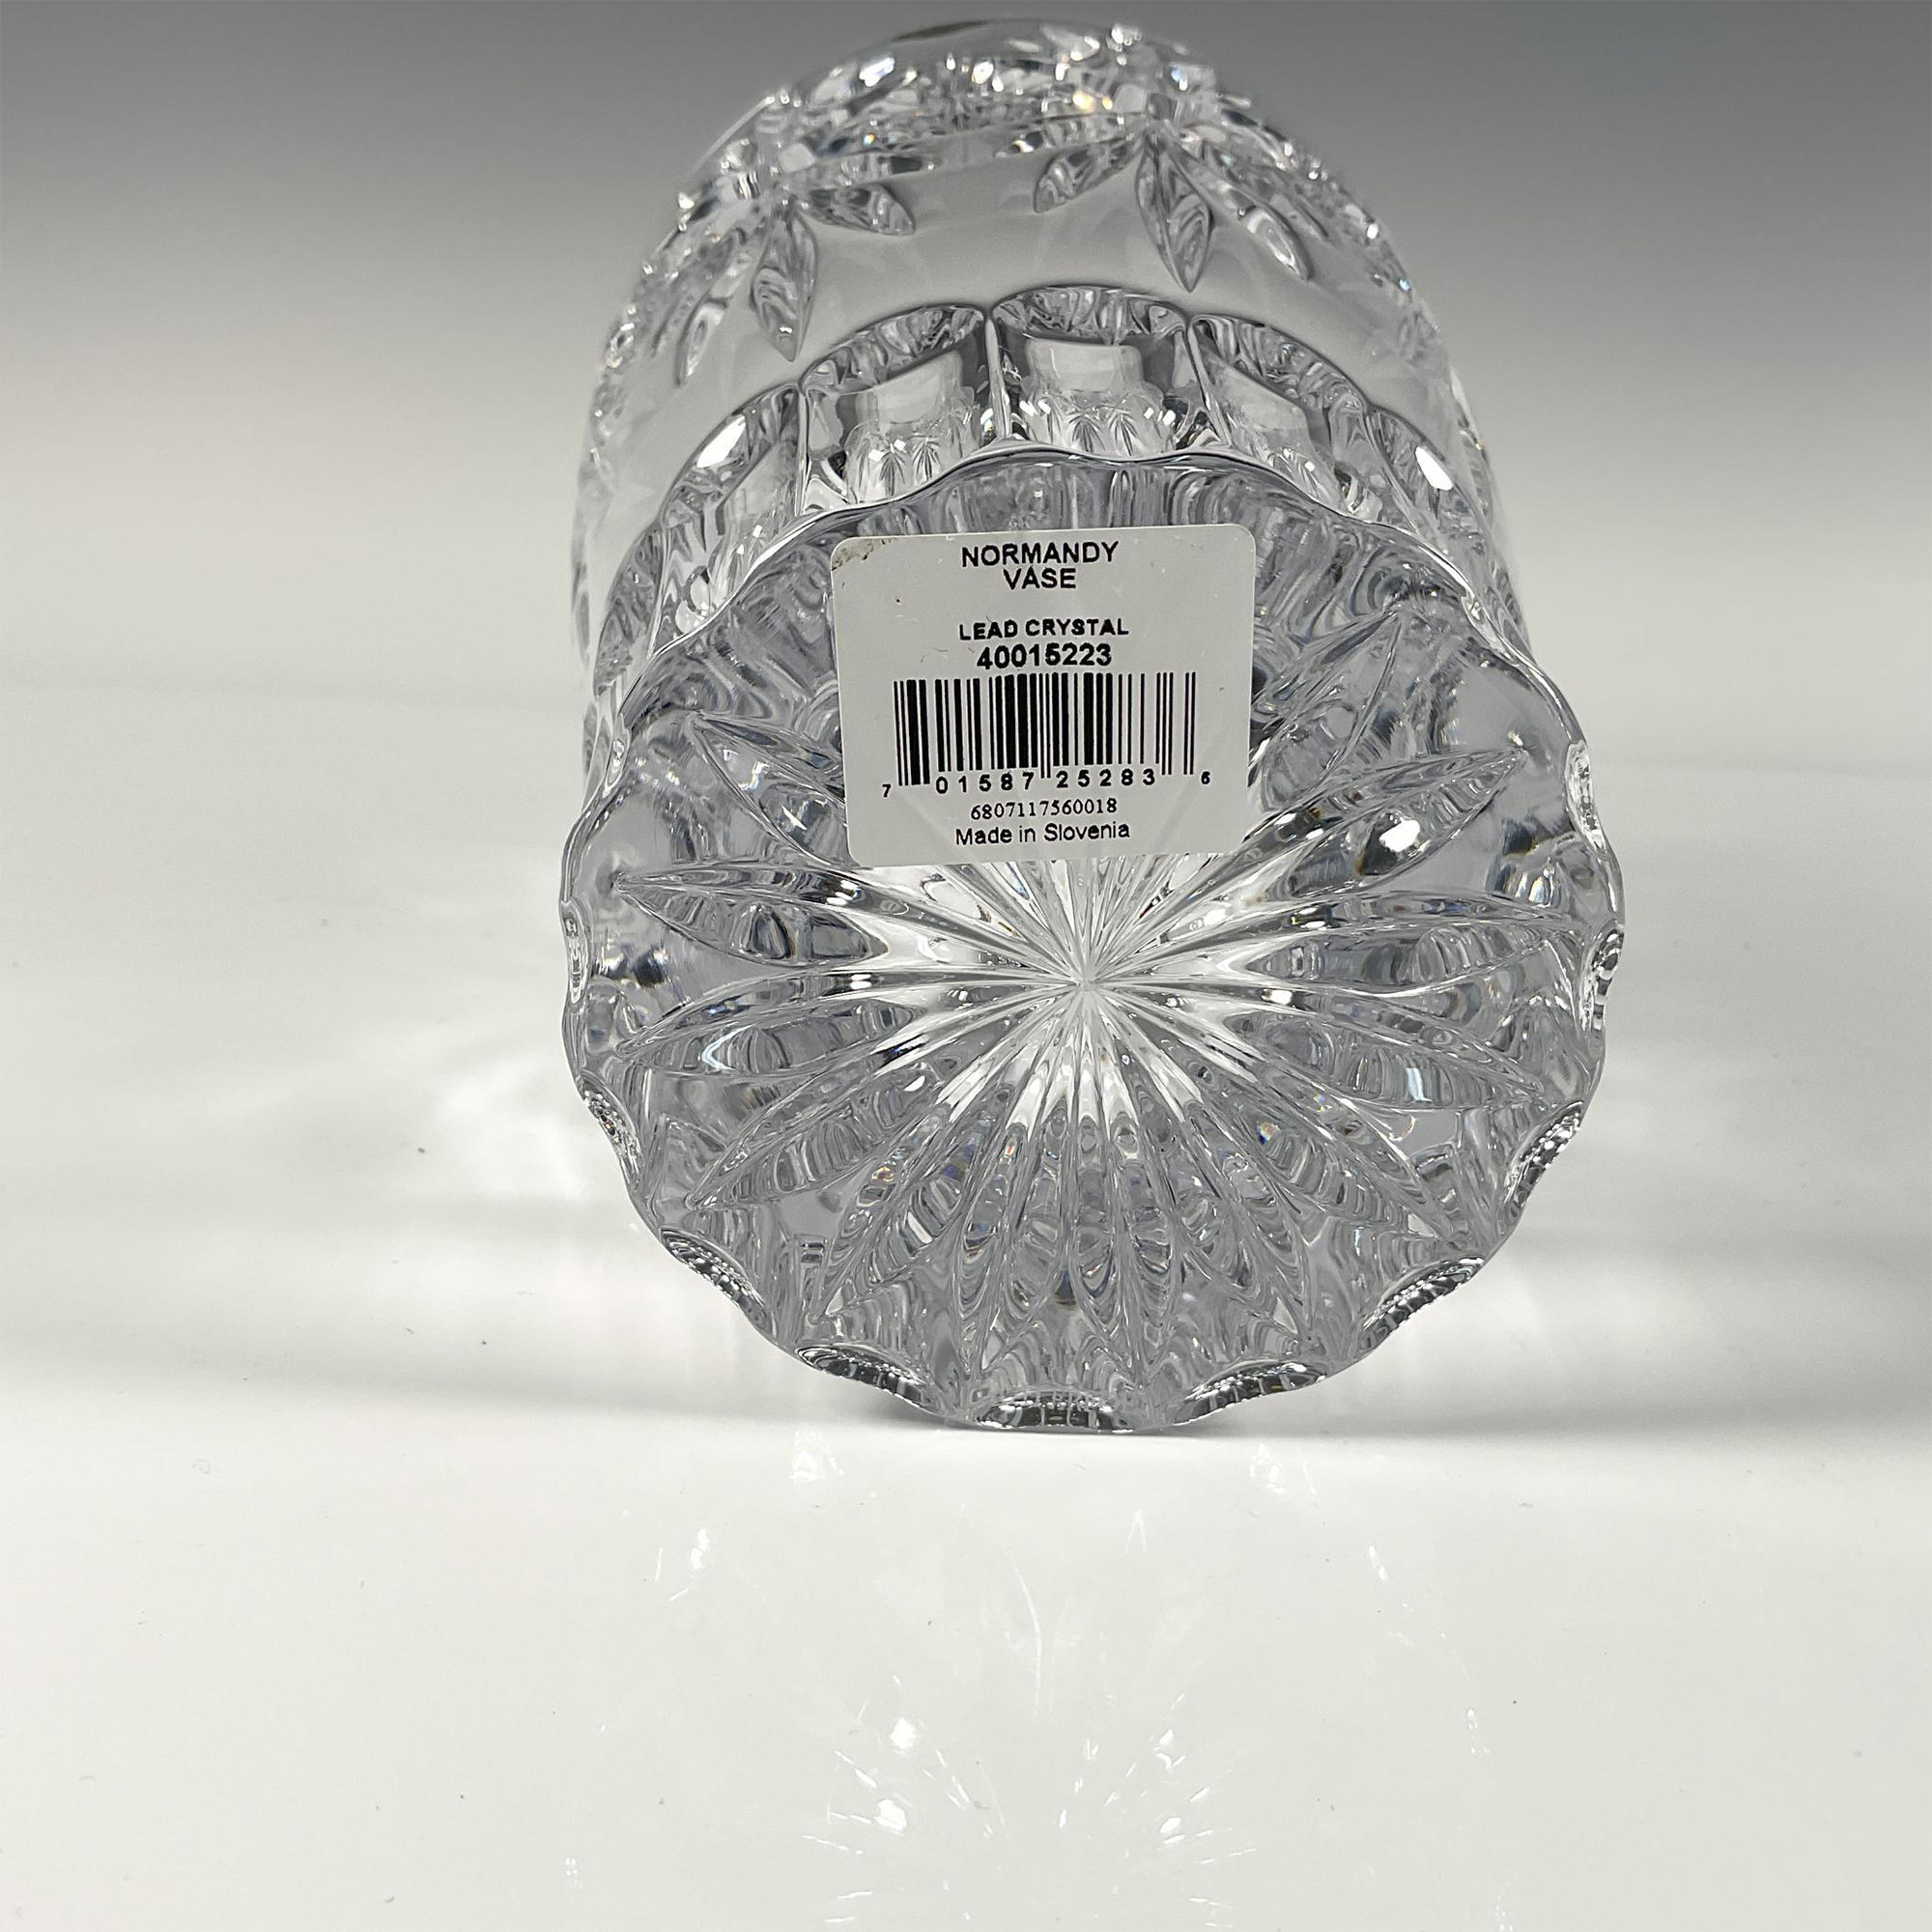 Waterford Crystal Vase, Normandy - Image 3 of 5